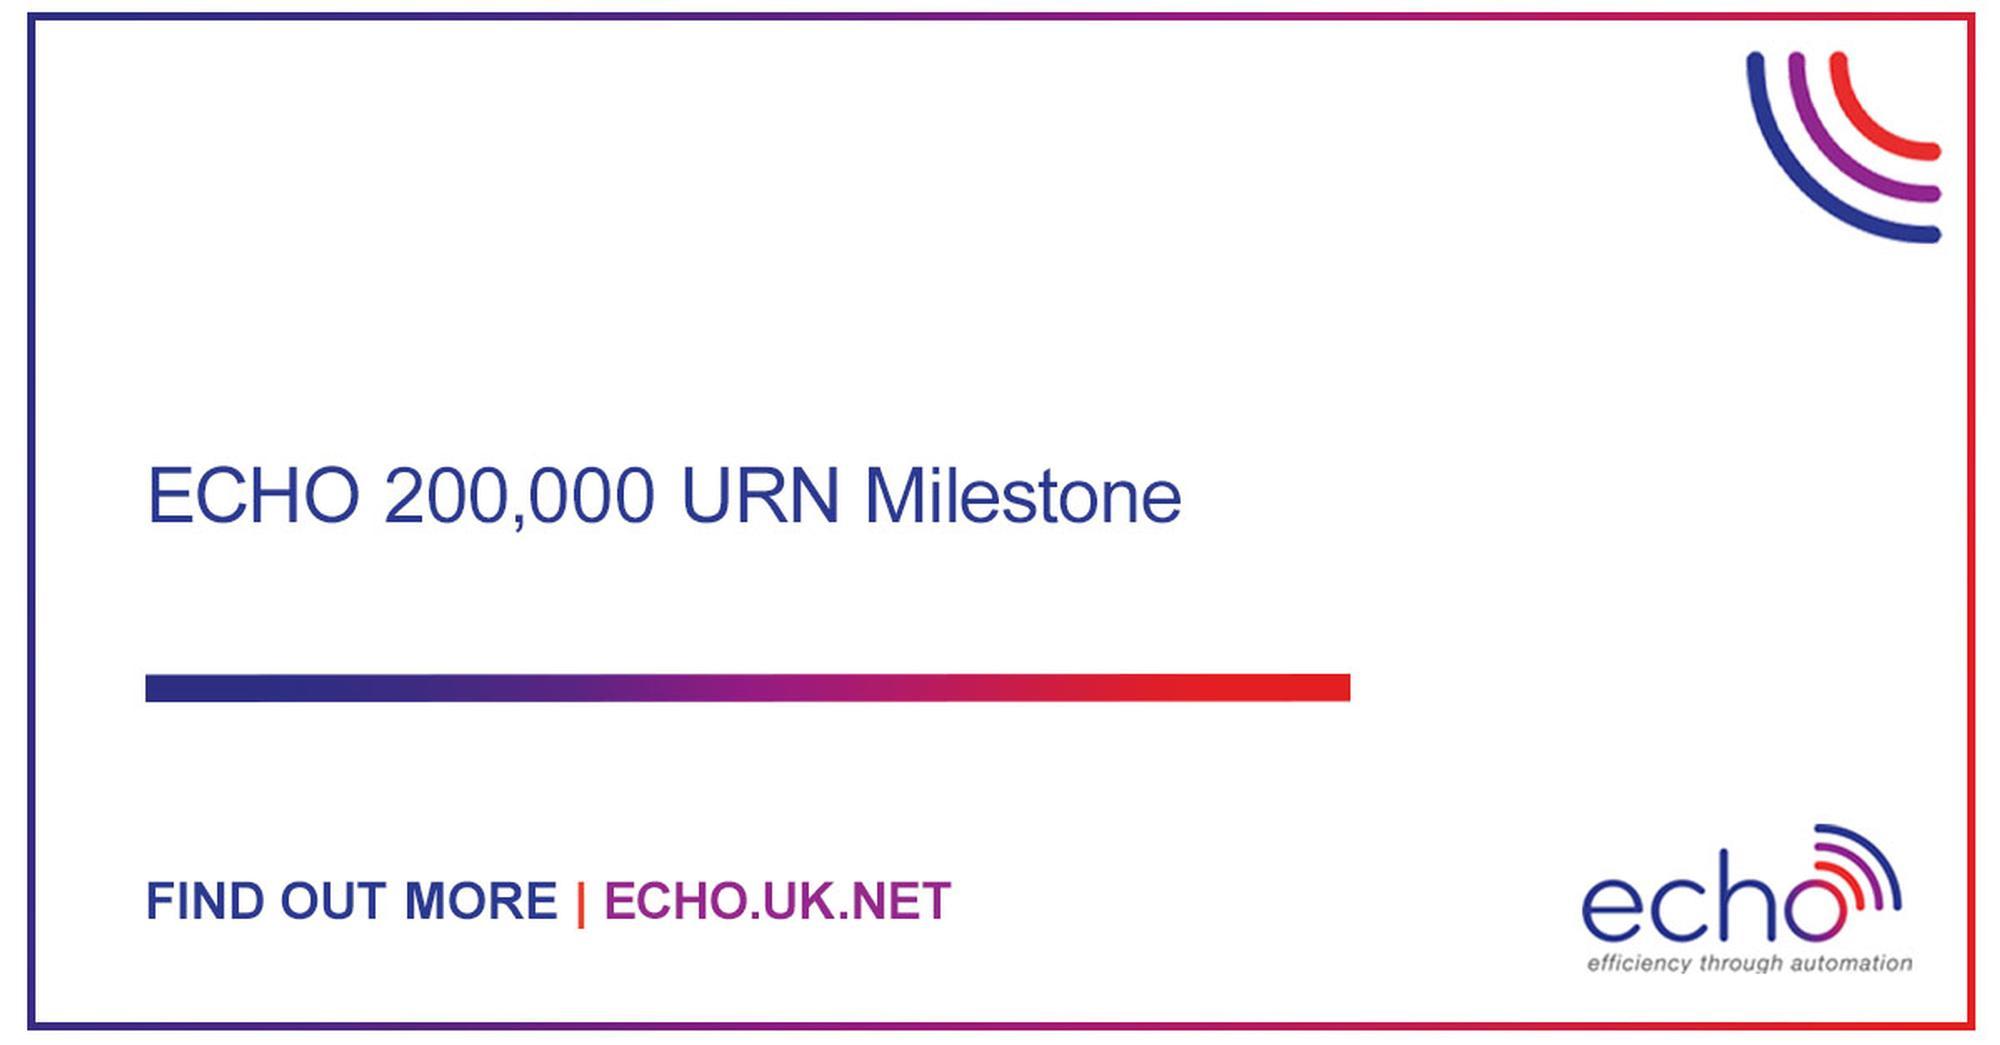 ECHO's 200k Milestone